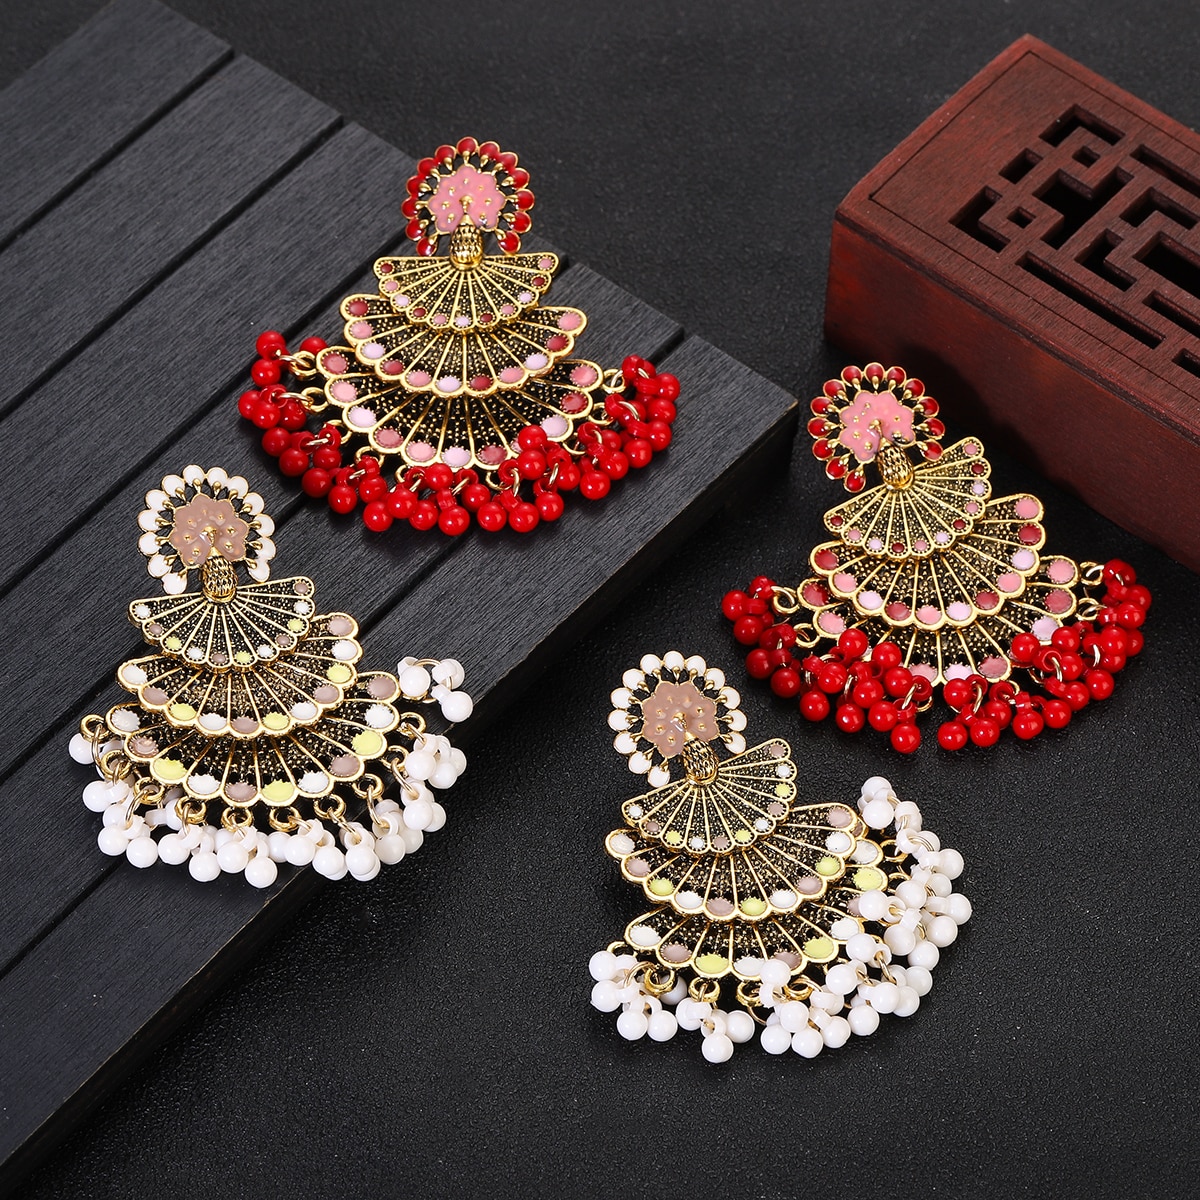 Indian-Jewellery-Red-White-Sector-Jhumka-Earrings-For-Women-Orecchini-Retro-Pear